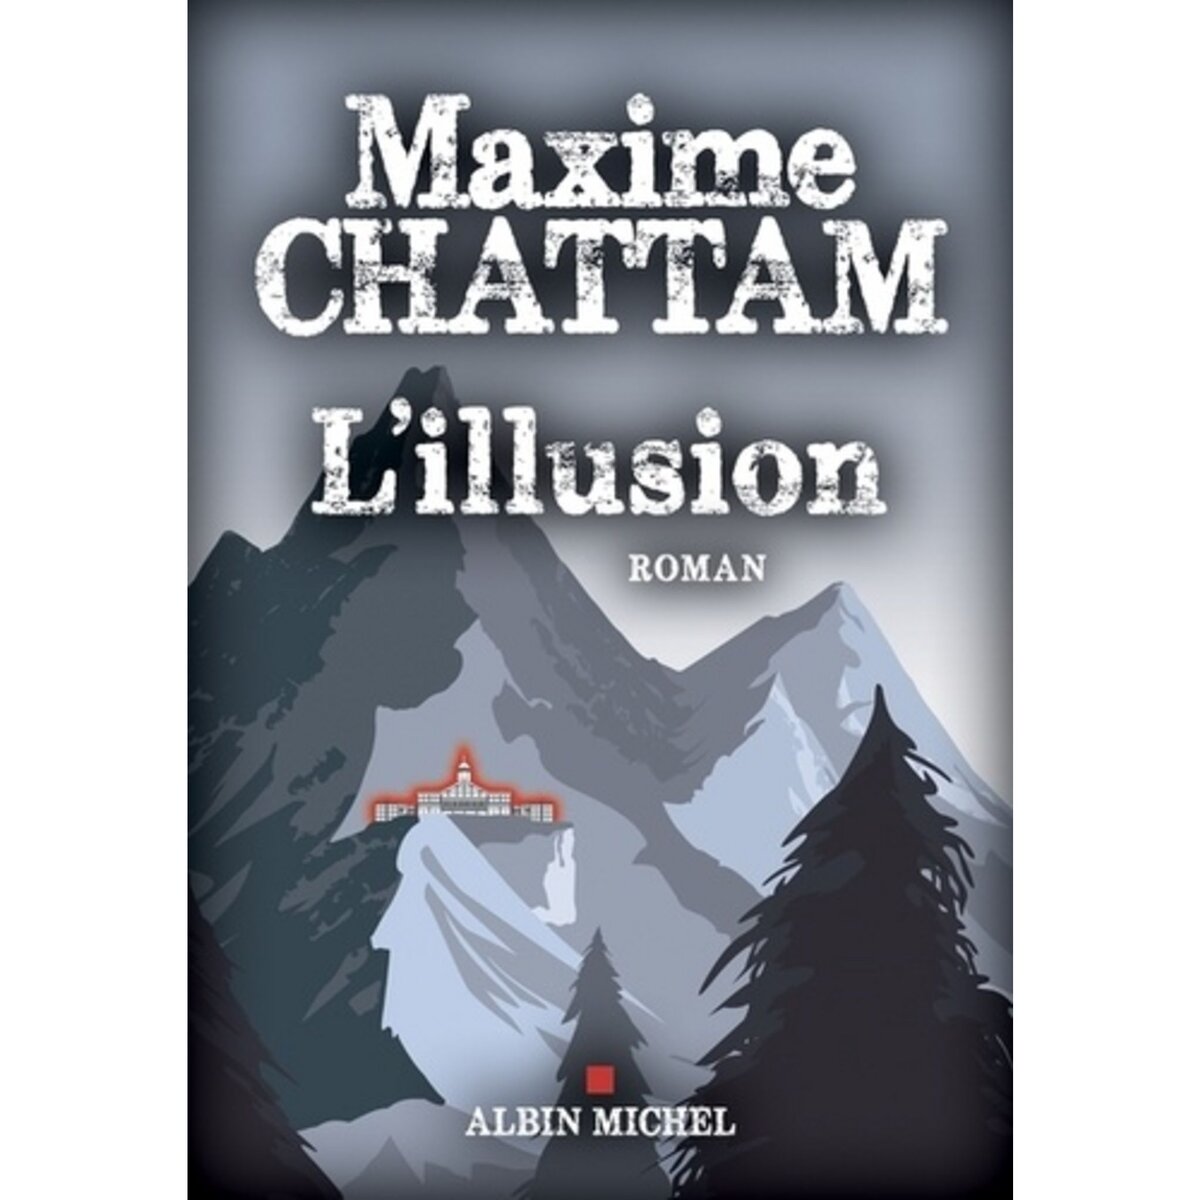  L'ILLUSION, Chattam Maxime